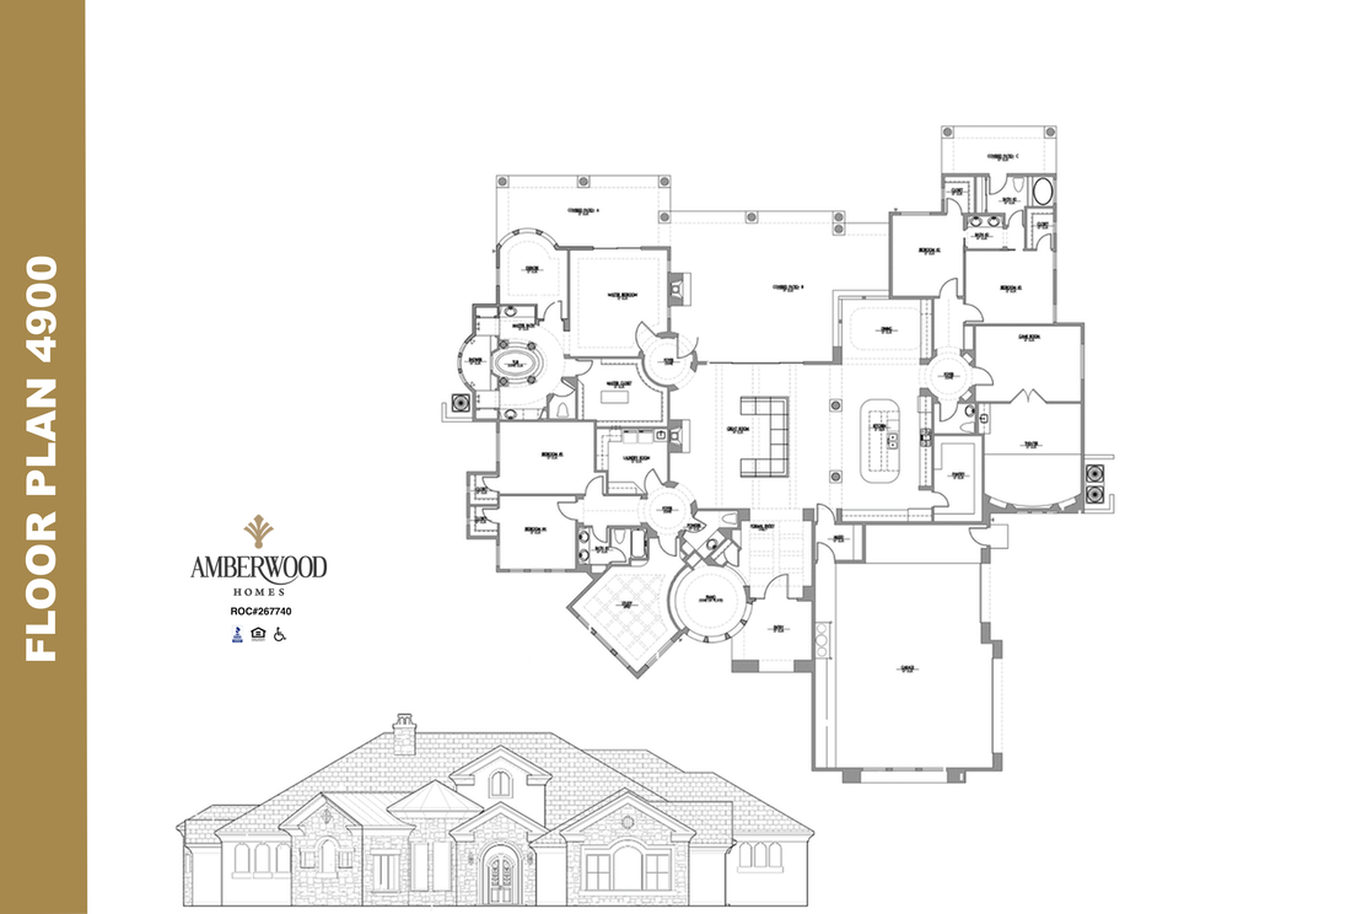 Amberwood homes, floor plan and elevation.